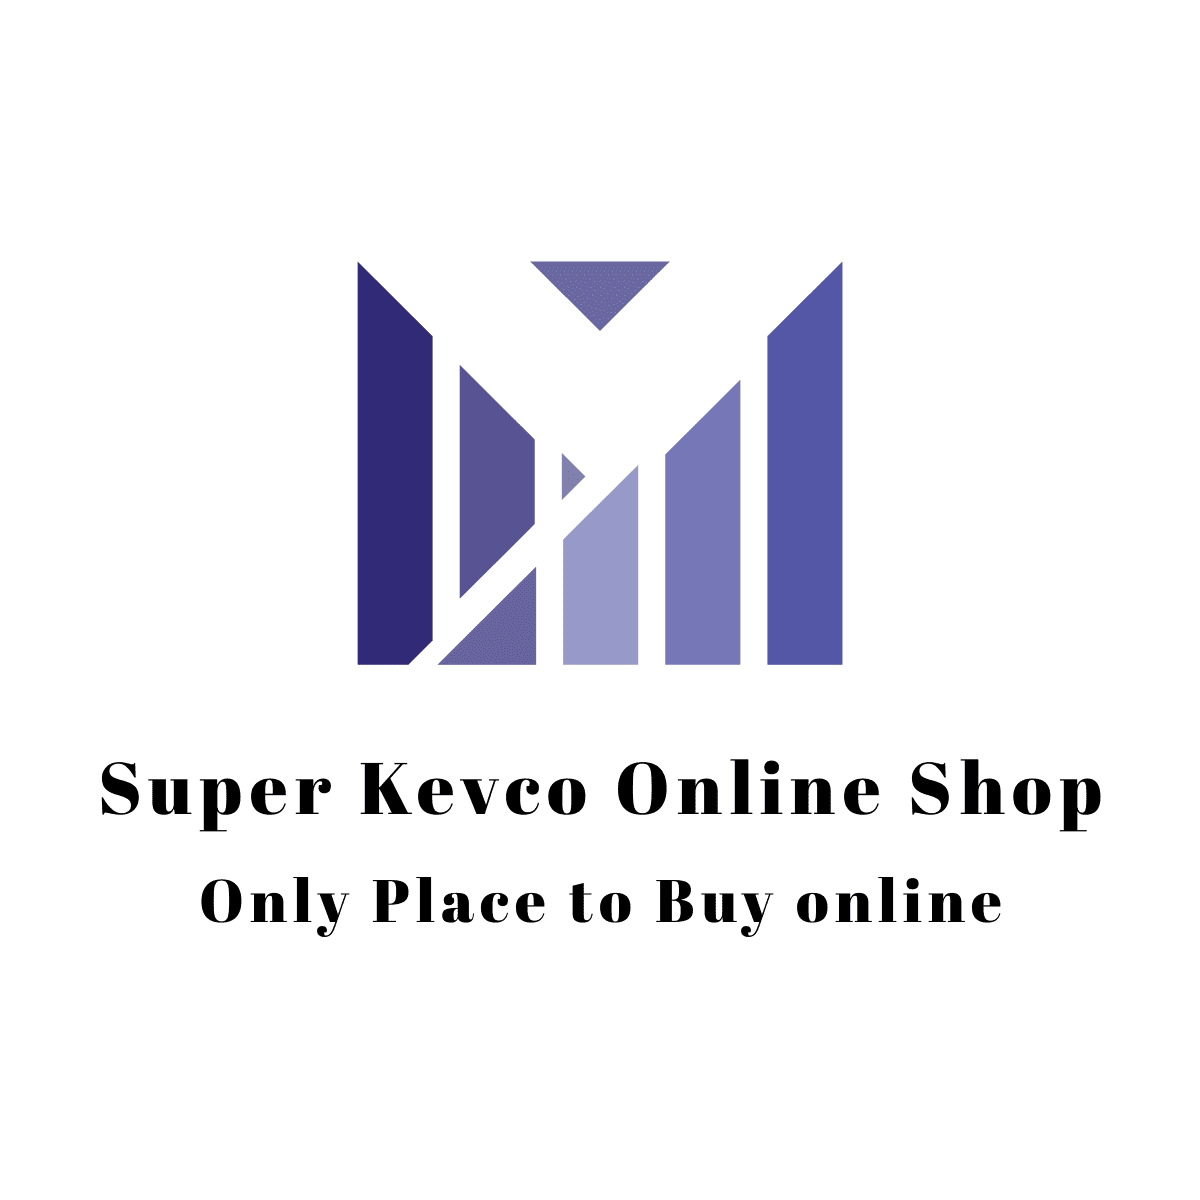 Super Kevco Online Shop